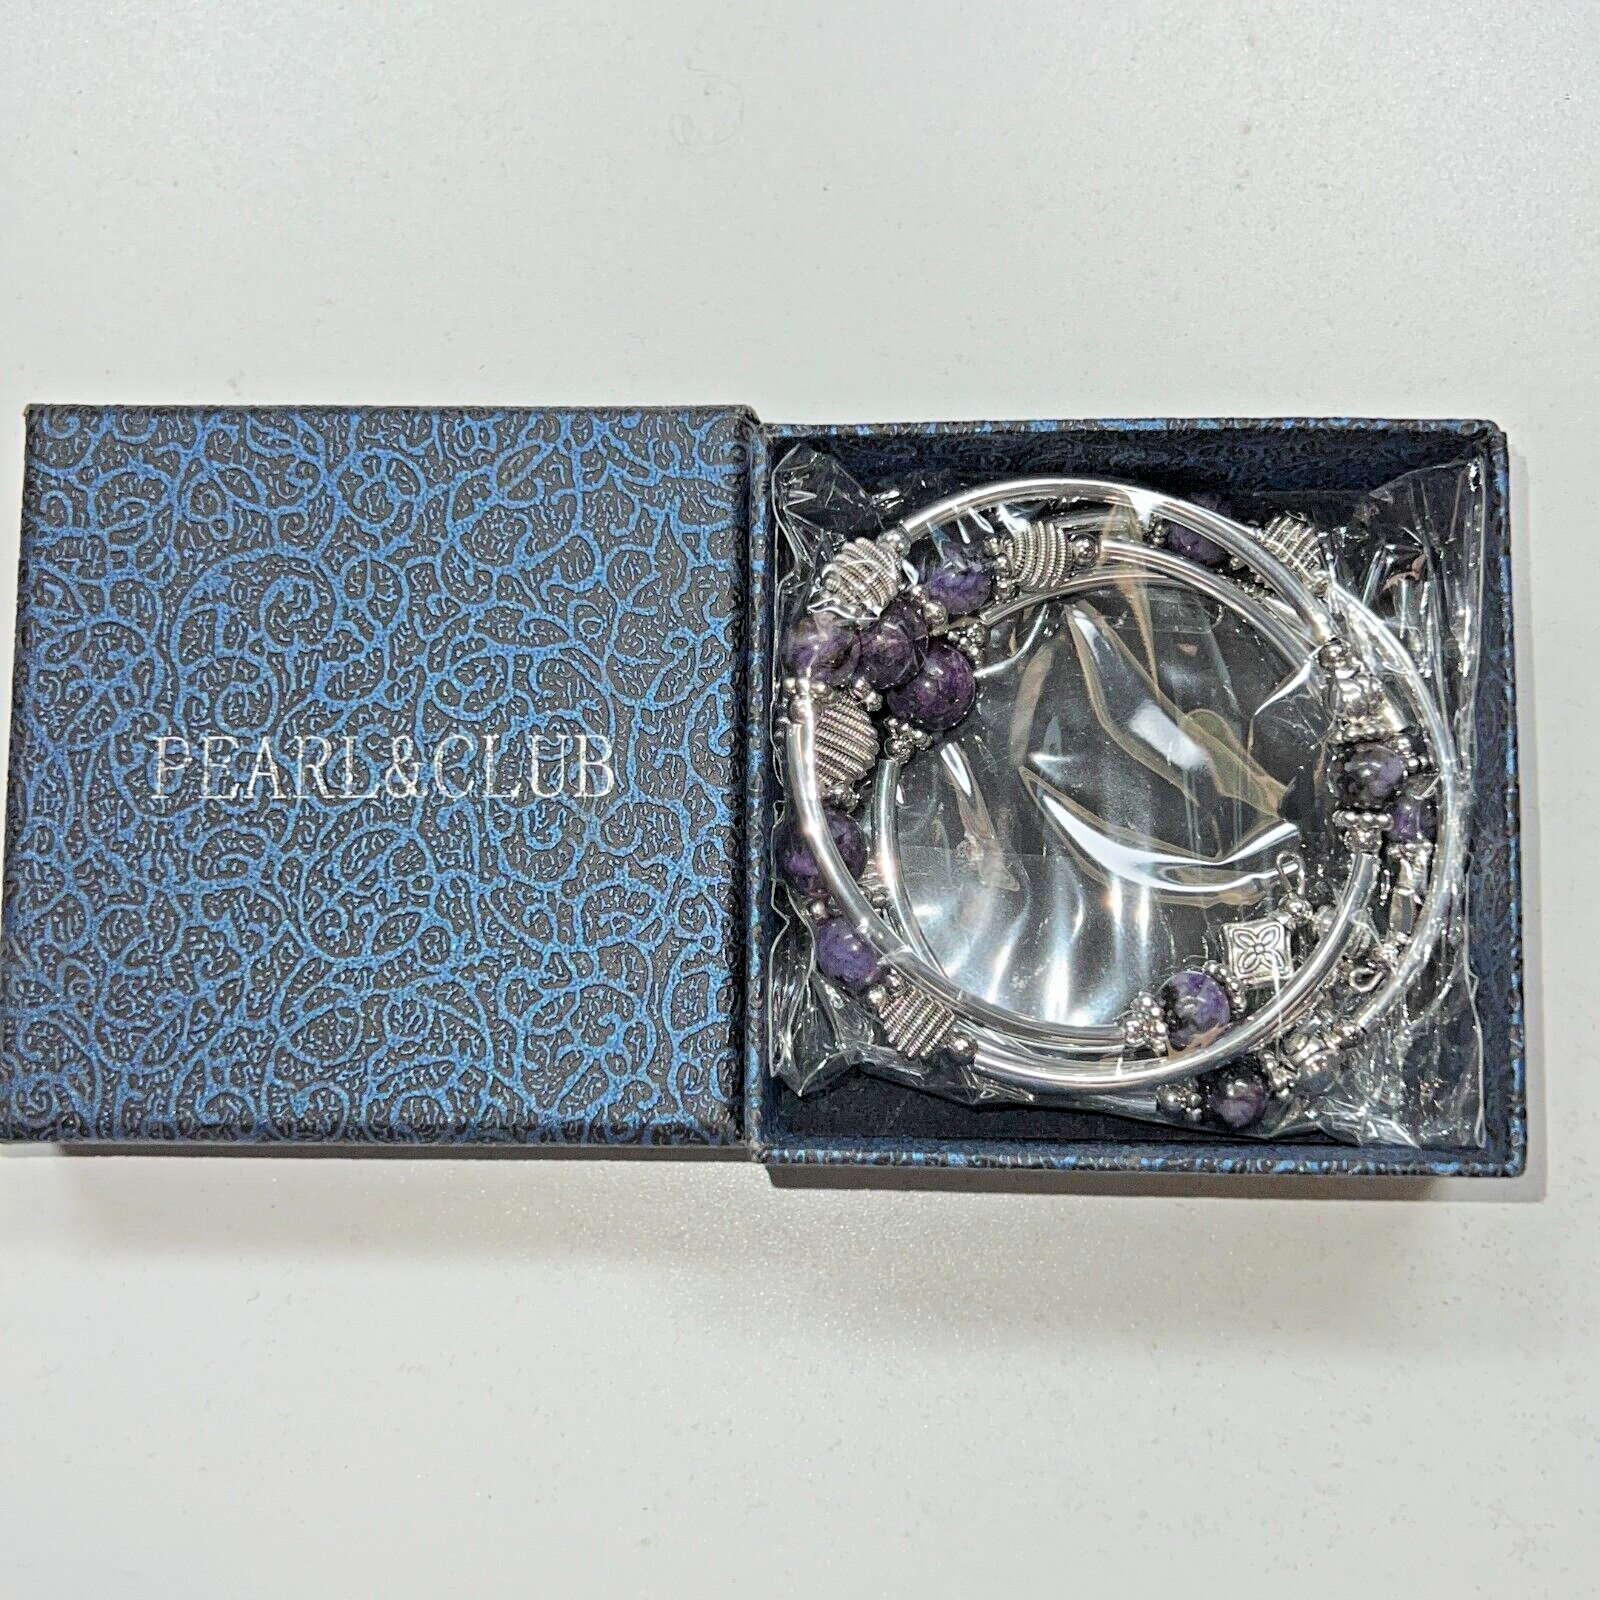 NIOB Pearl & Club Women's Purple Beaded Chakra Wrap Bangle Bracelet